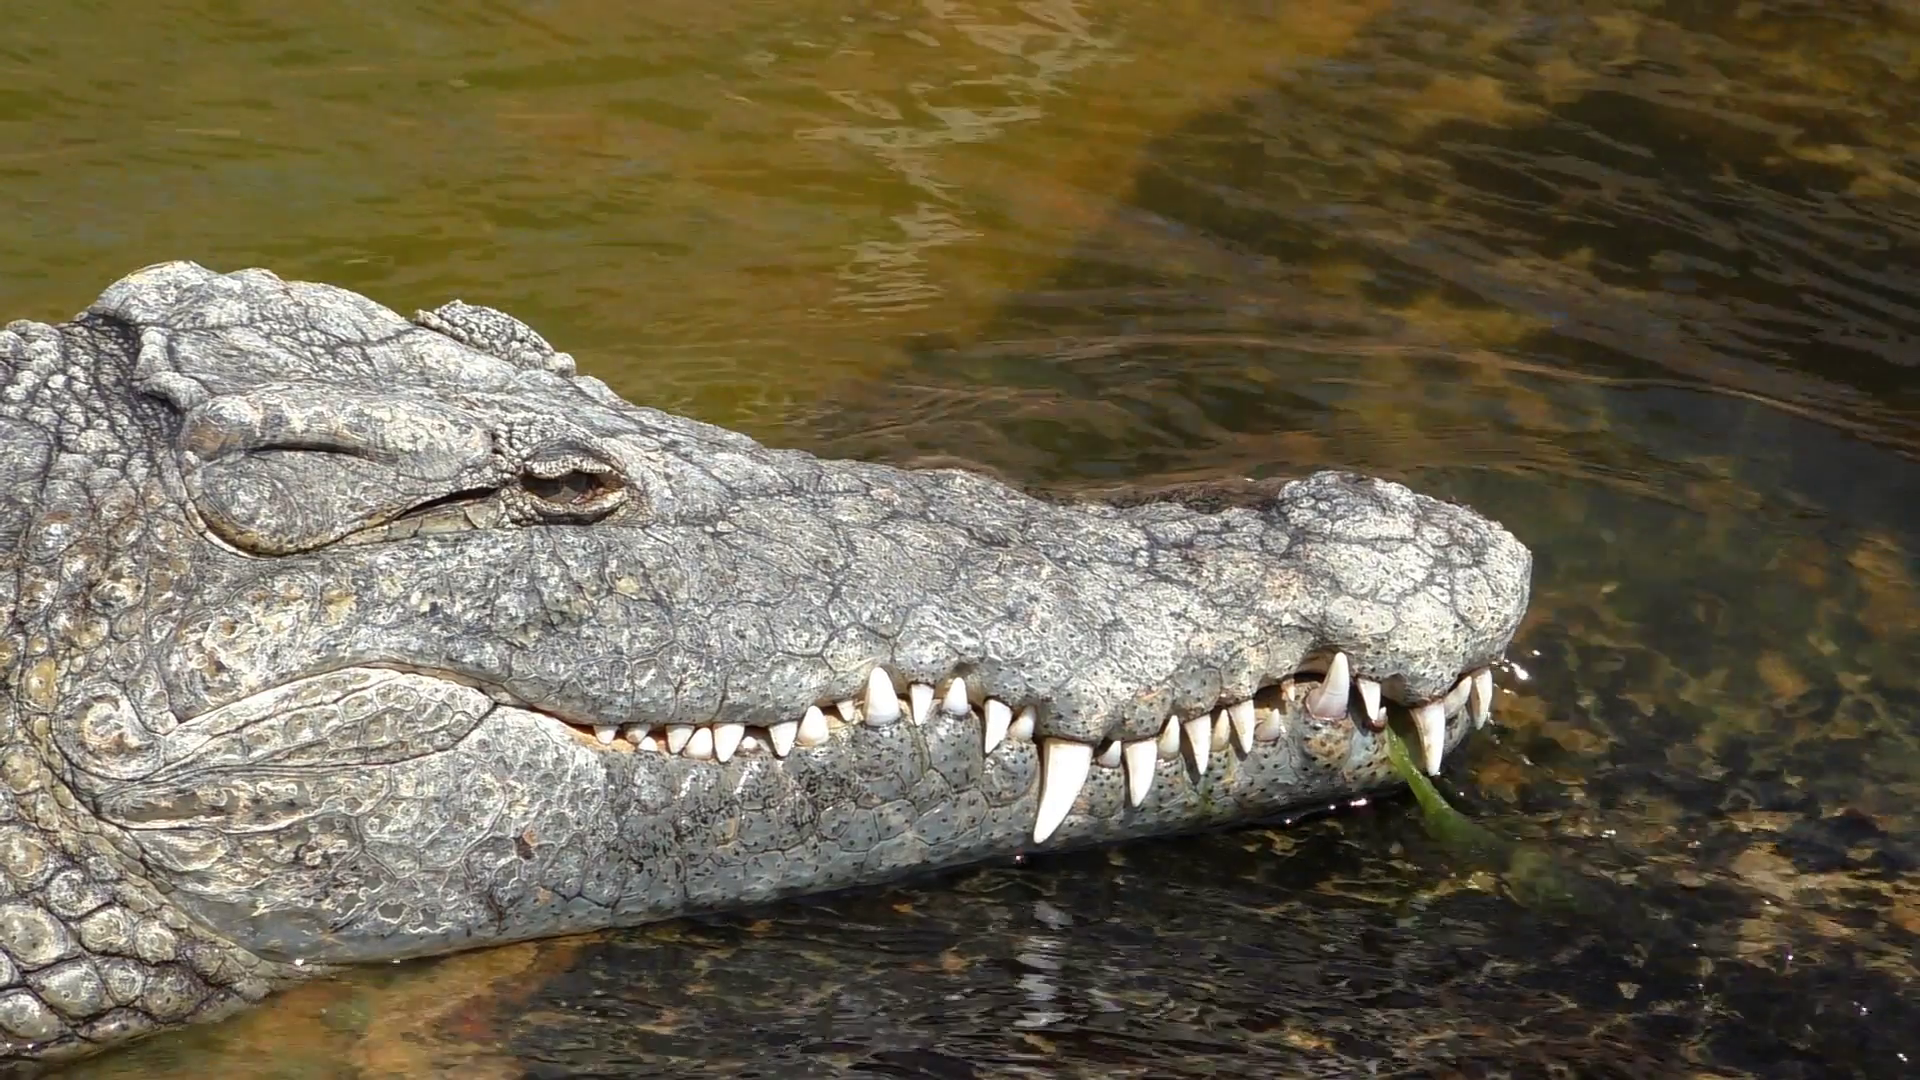 Alligator closeup photo